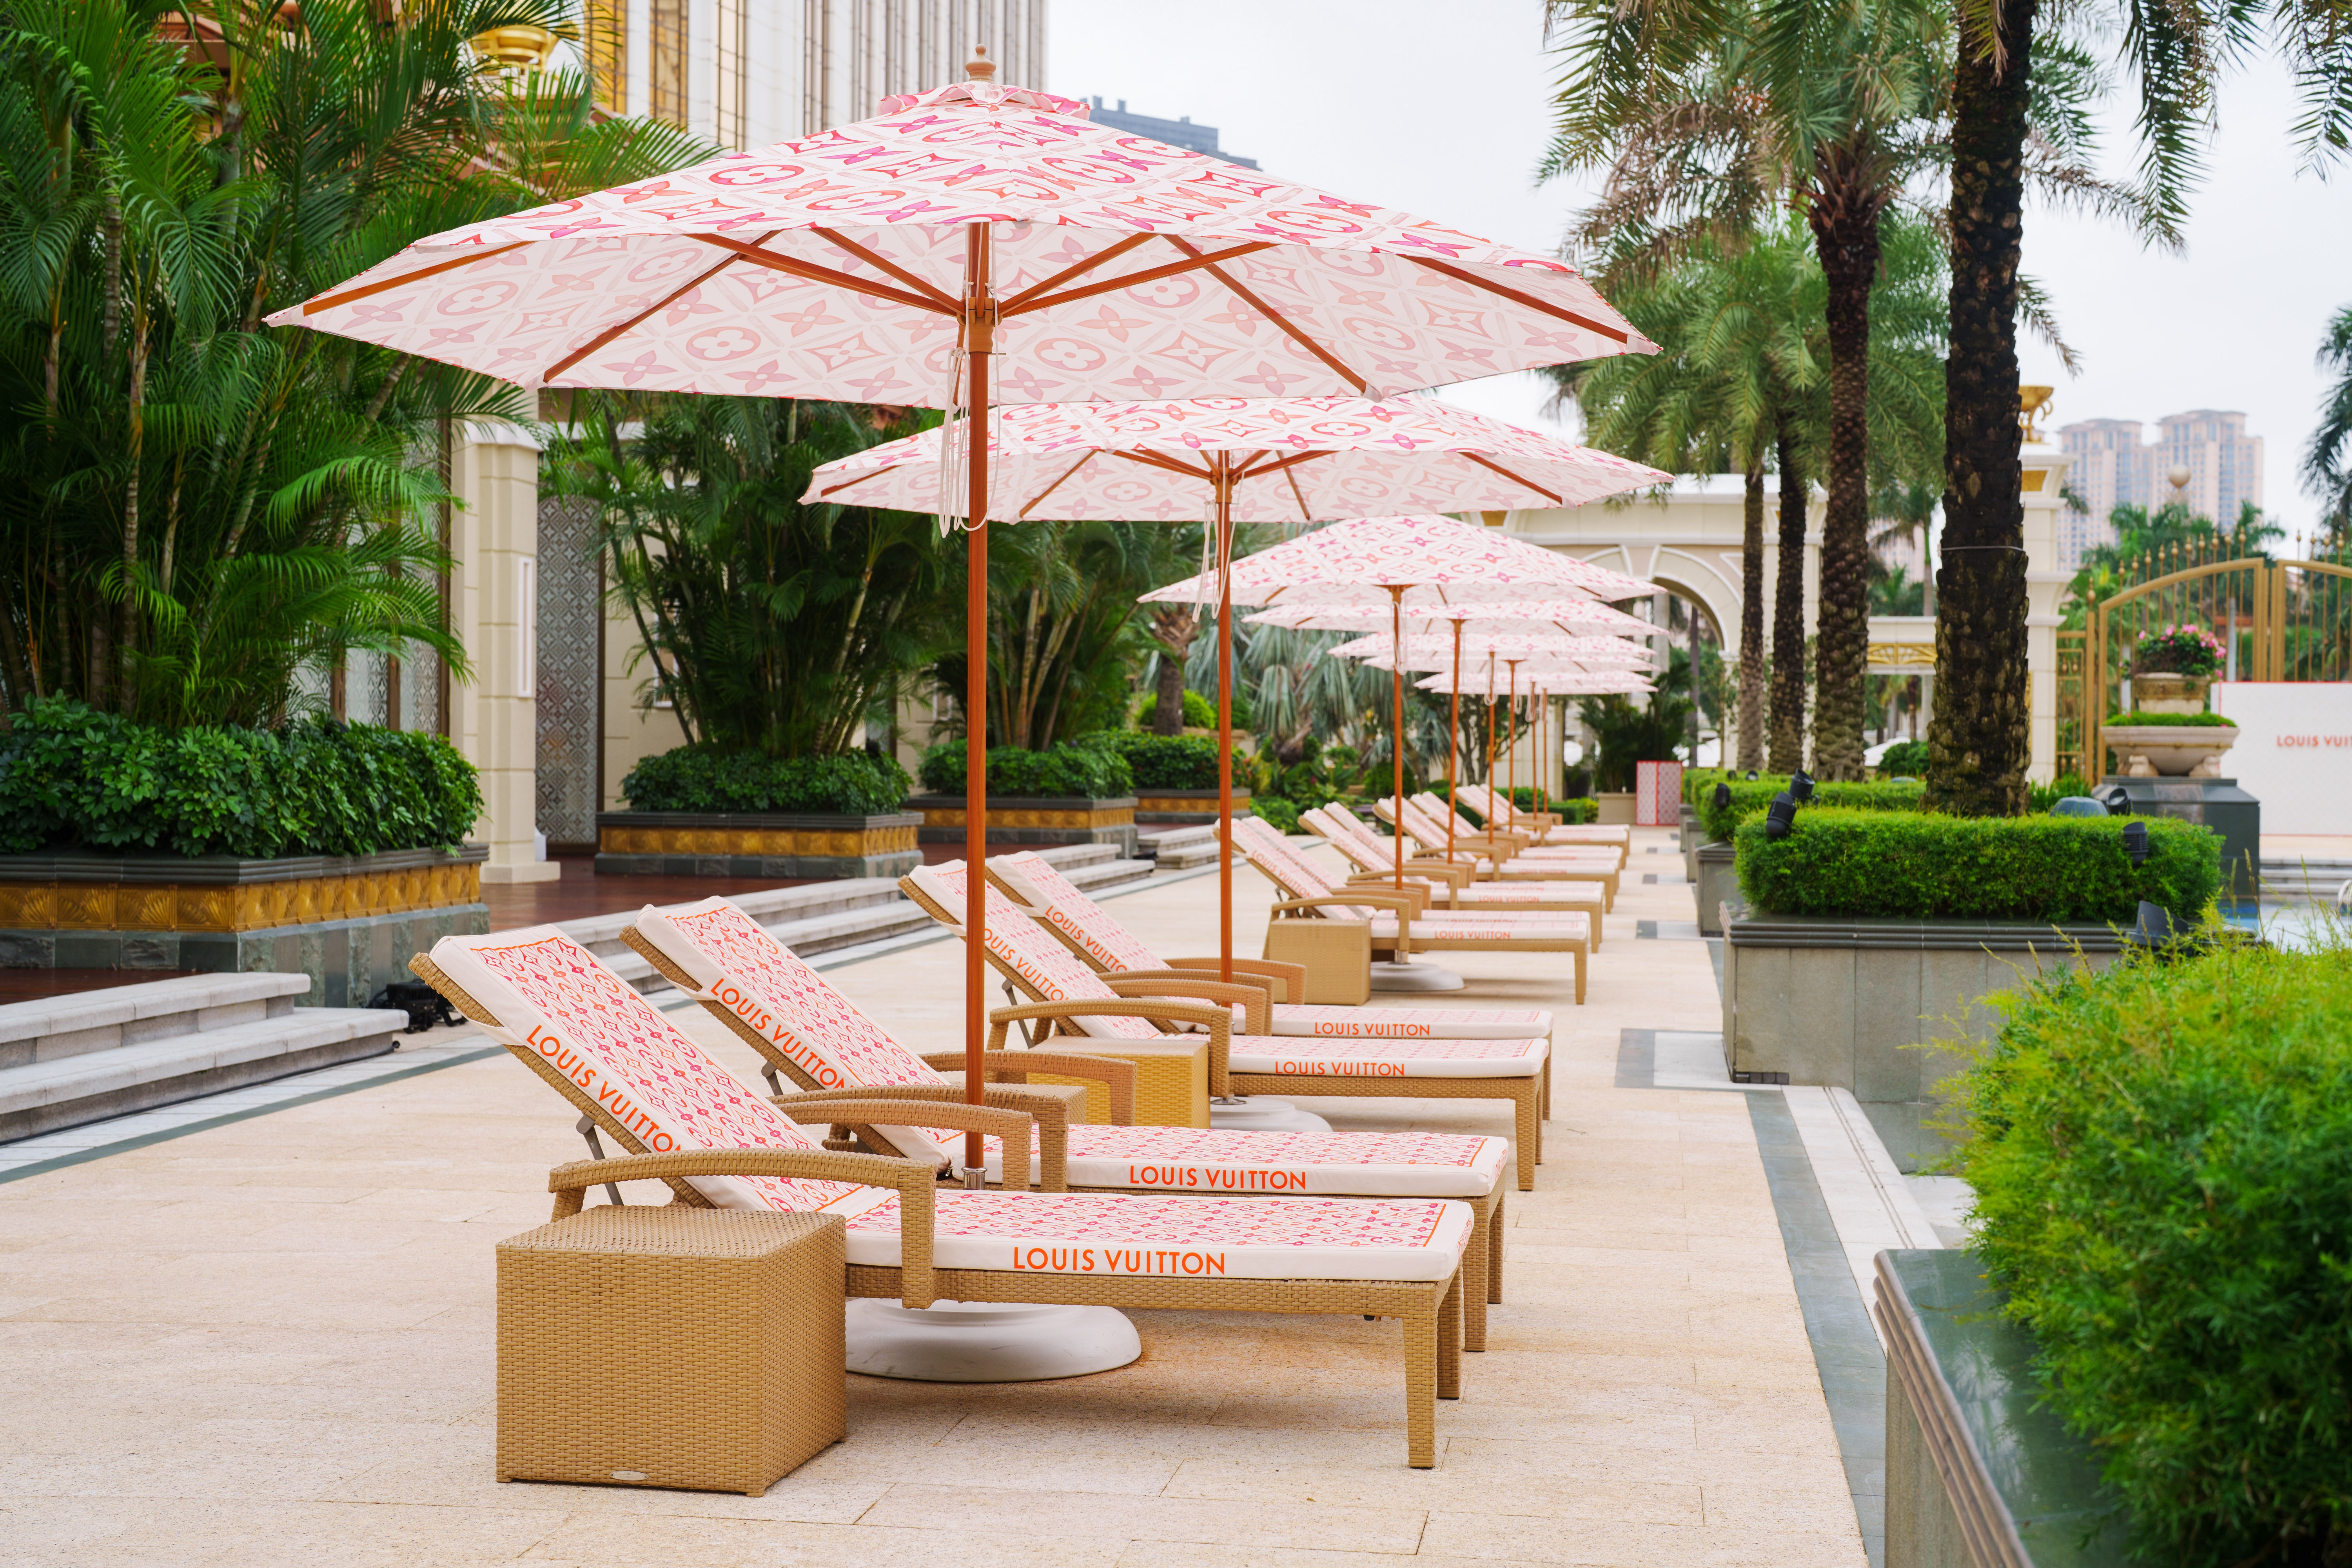 The LV monogram decorates beach chairs and poolside umbrellas. Image: Galaxy Macau